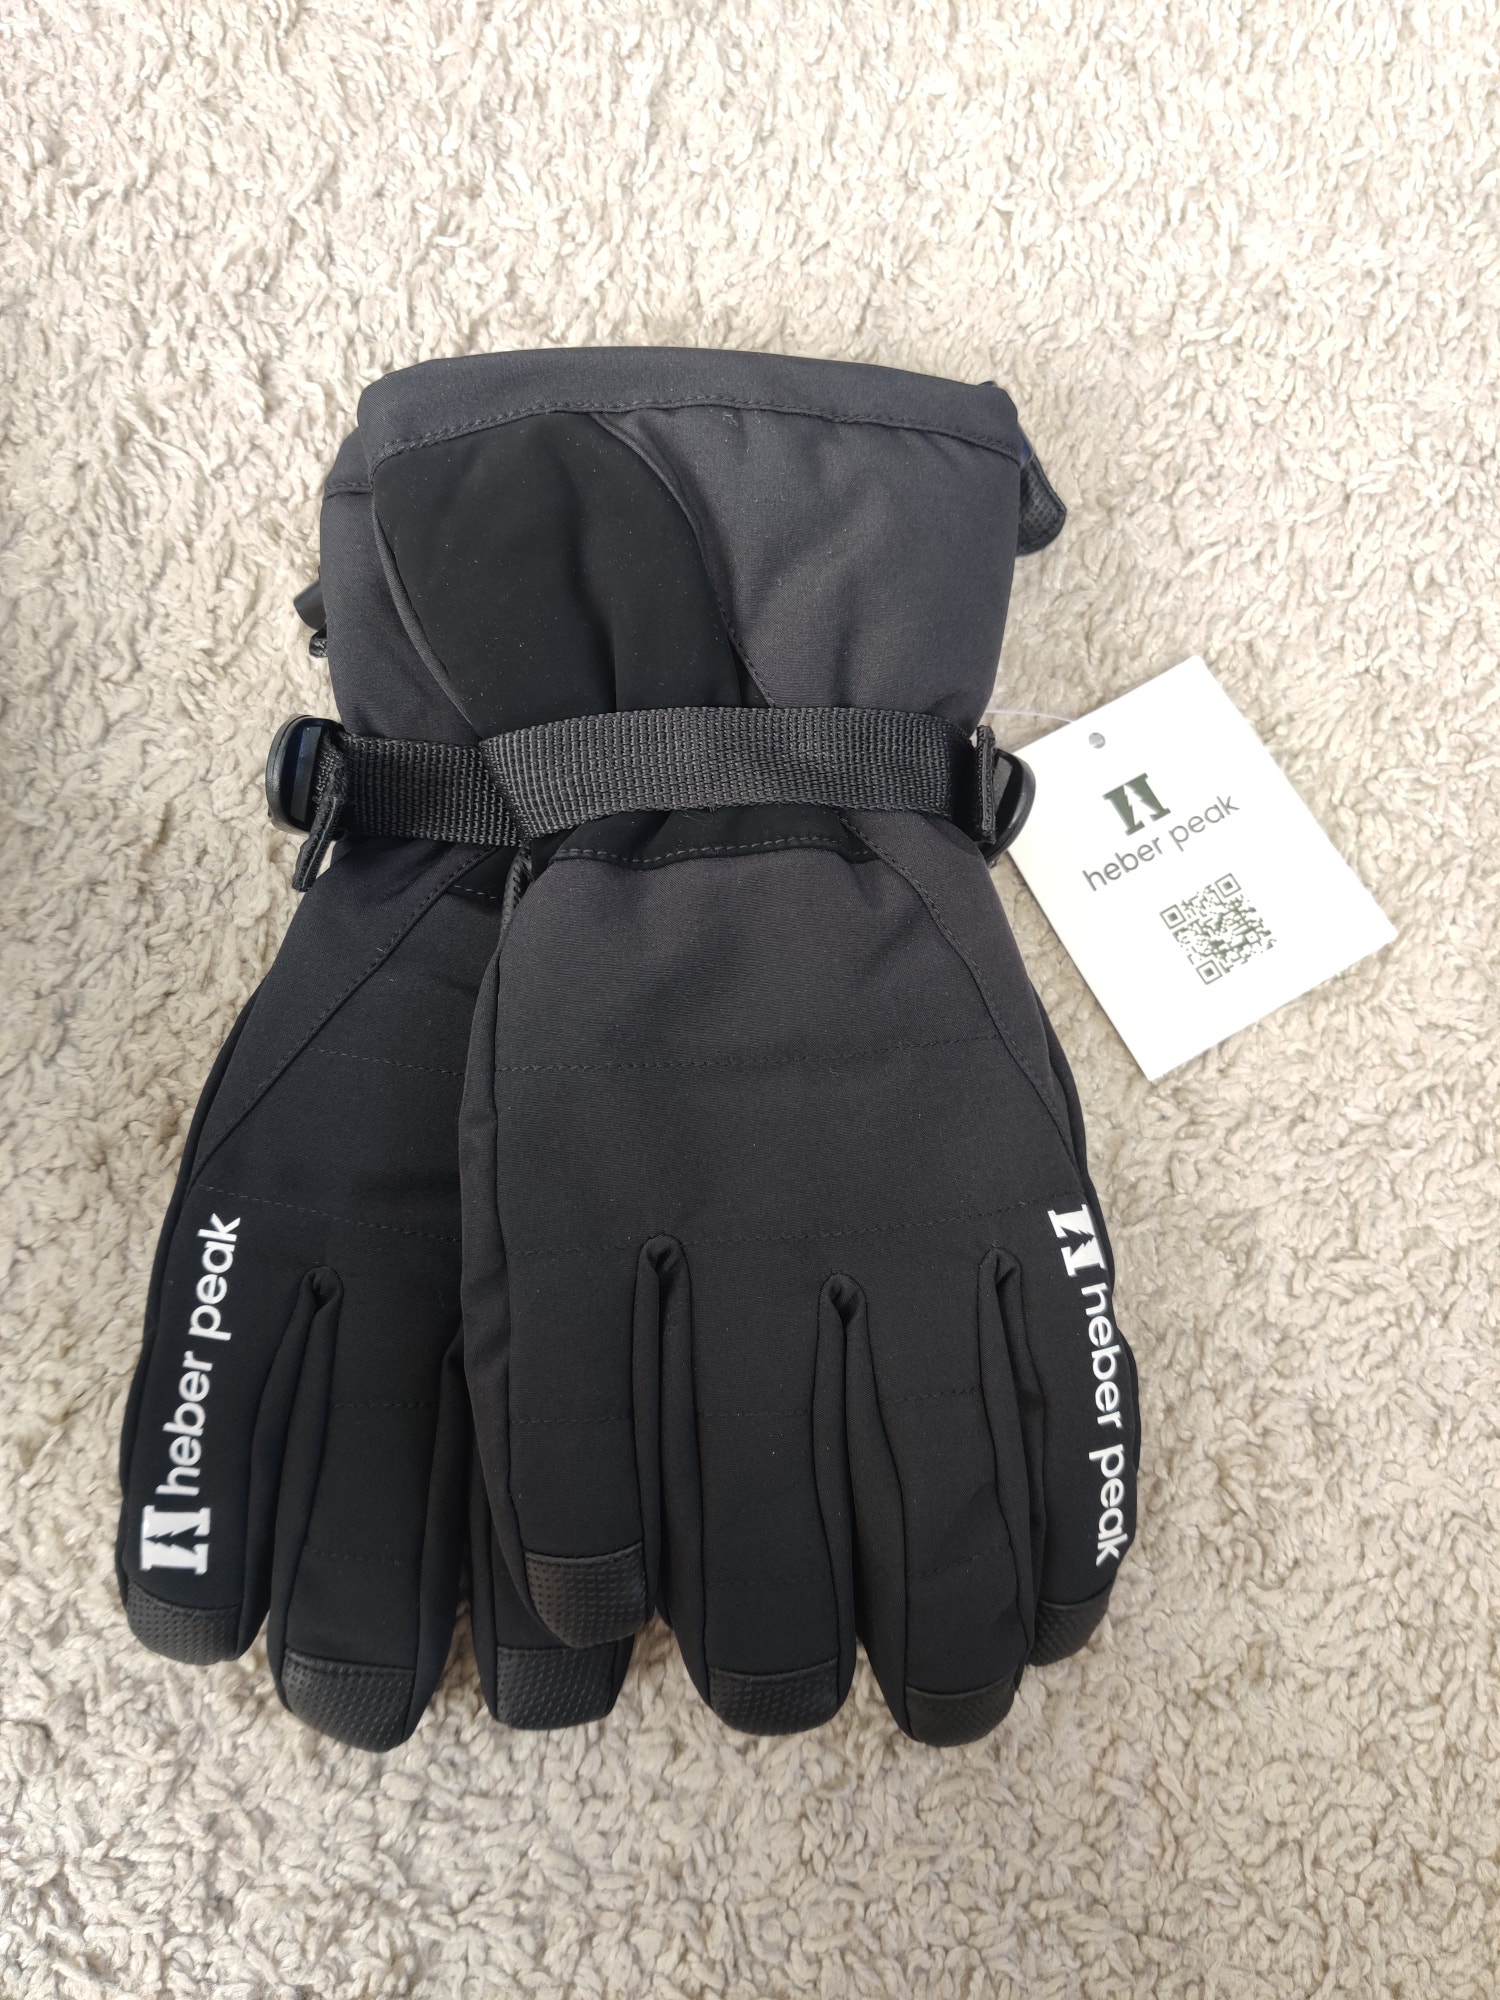 (V) Heber Peak Viggest 5 Finger Glove MEN'S SKI AND SNOW WATERPROOF MITTENS SZ 9 - Picture 2 of 10